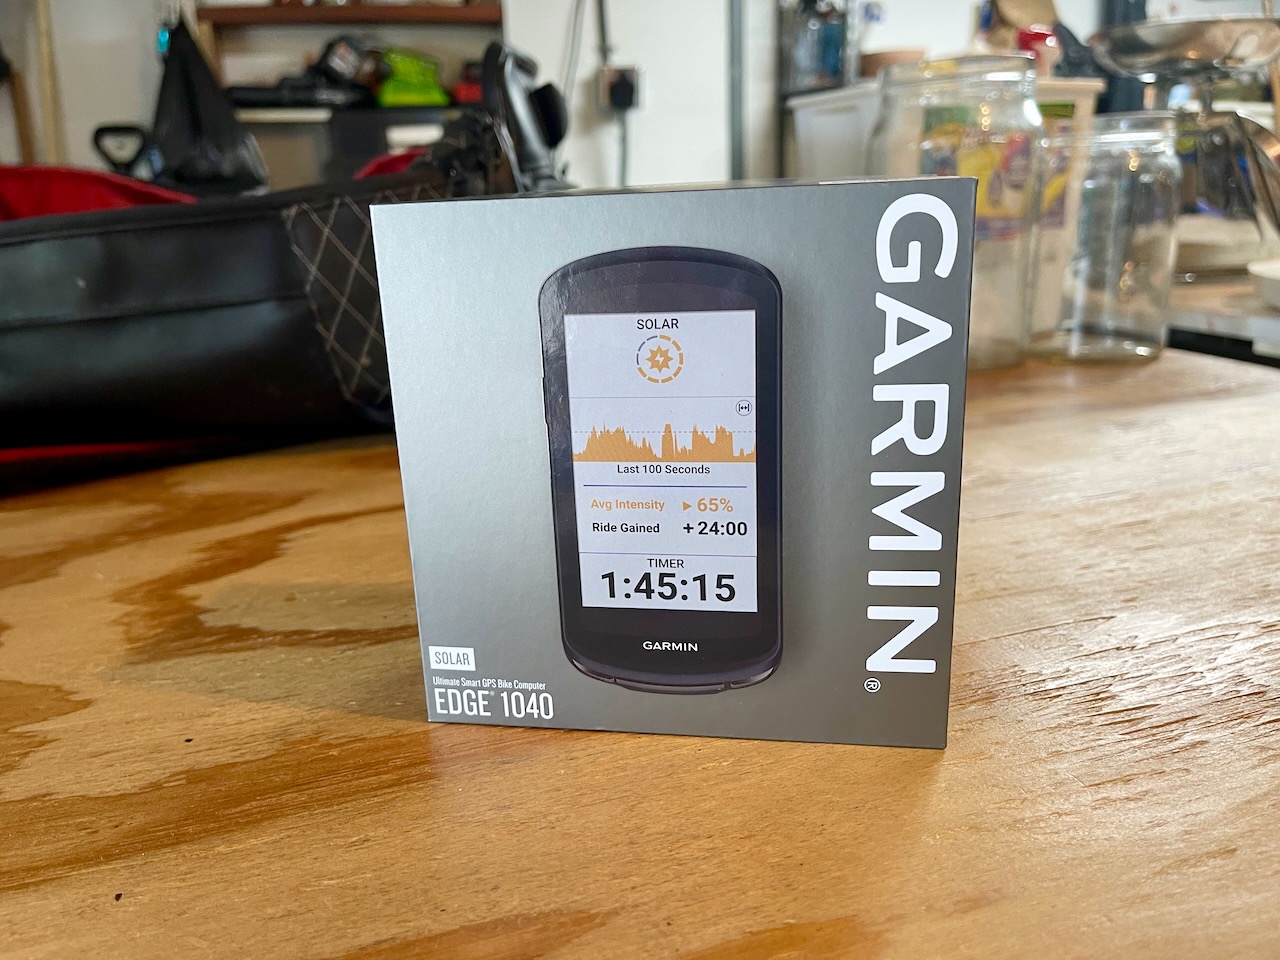 Garmin launches Edge 1040 bike computer with solar charging